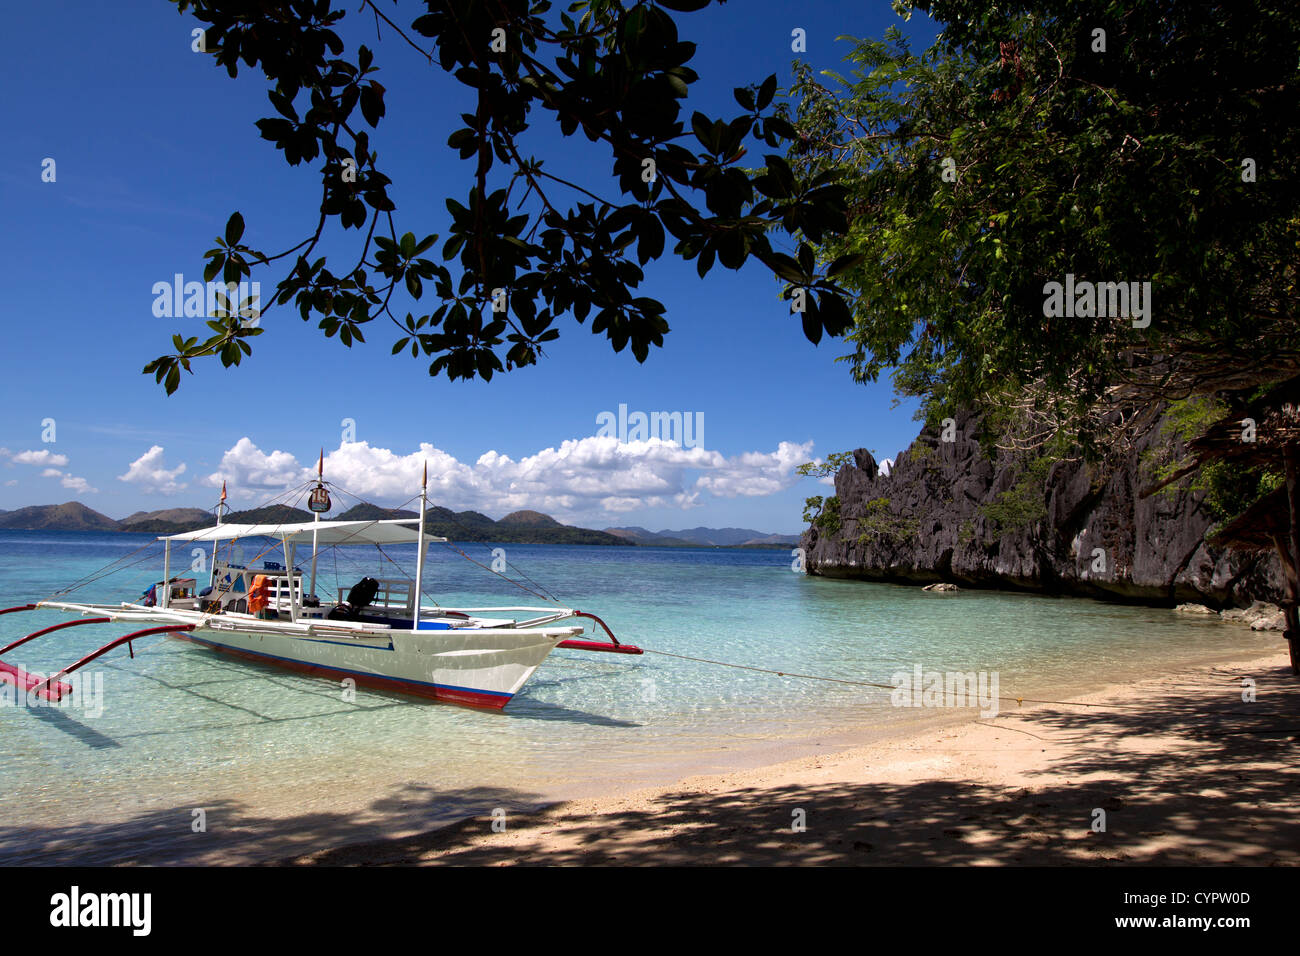 Banca boat moored on sandy beach,Coron Island,Palawan,Philippines Stock Photo